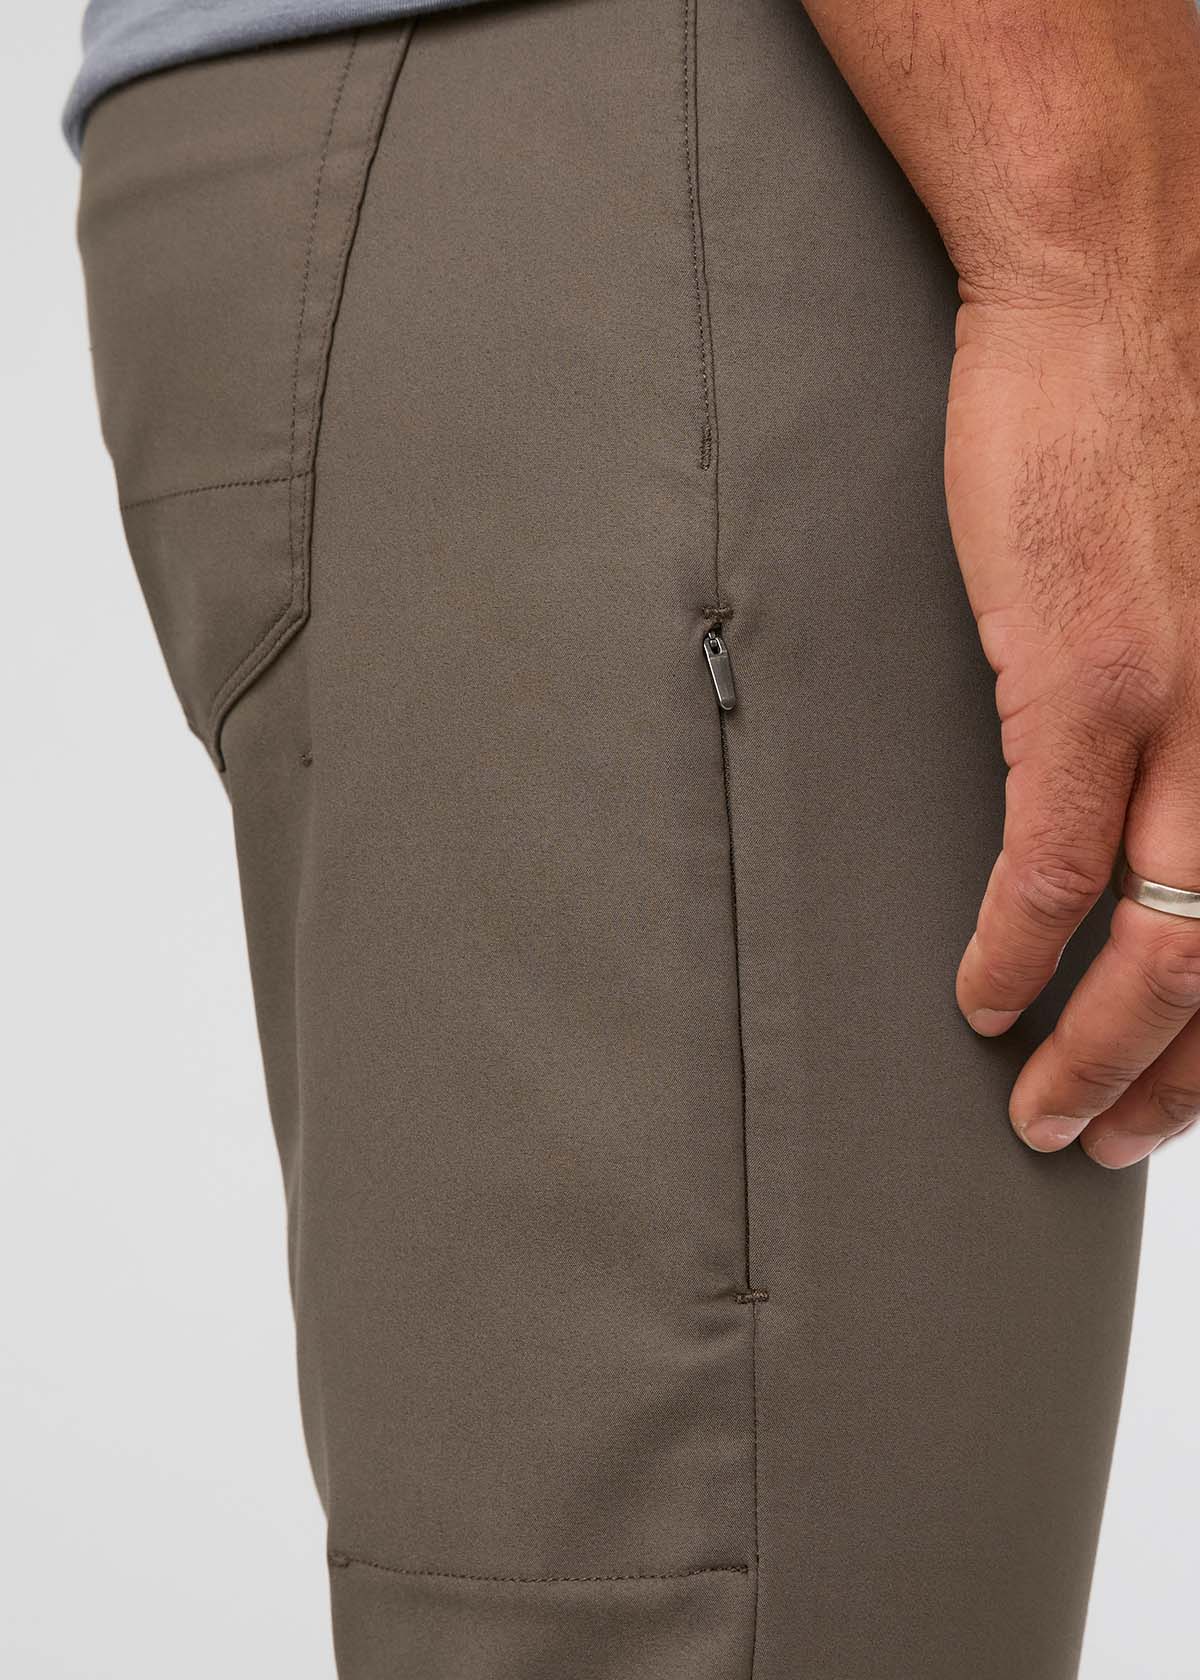 ABC Relaxed-Fit 5 Pocket Pant 34L *Warpstreme, Men's Trousers